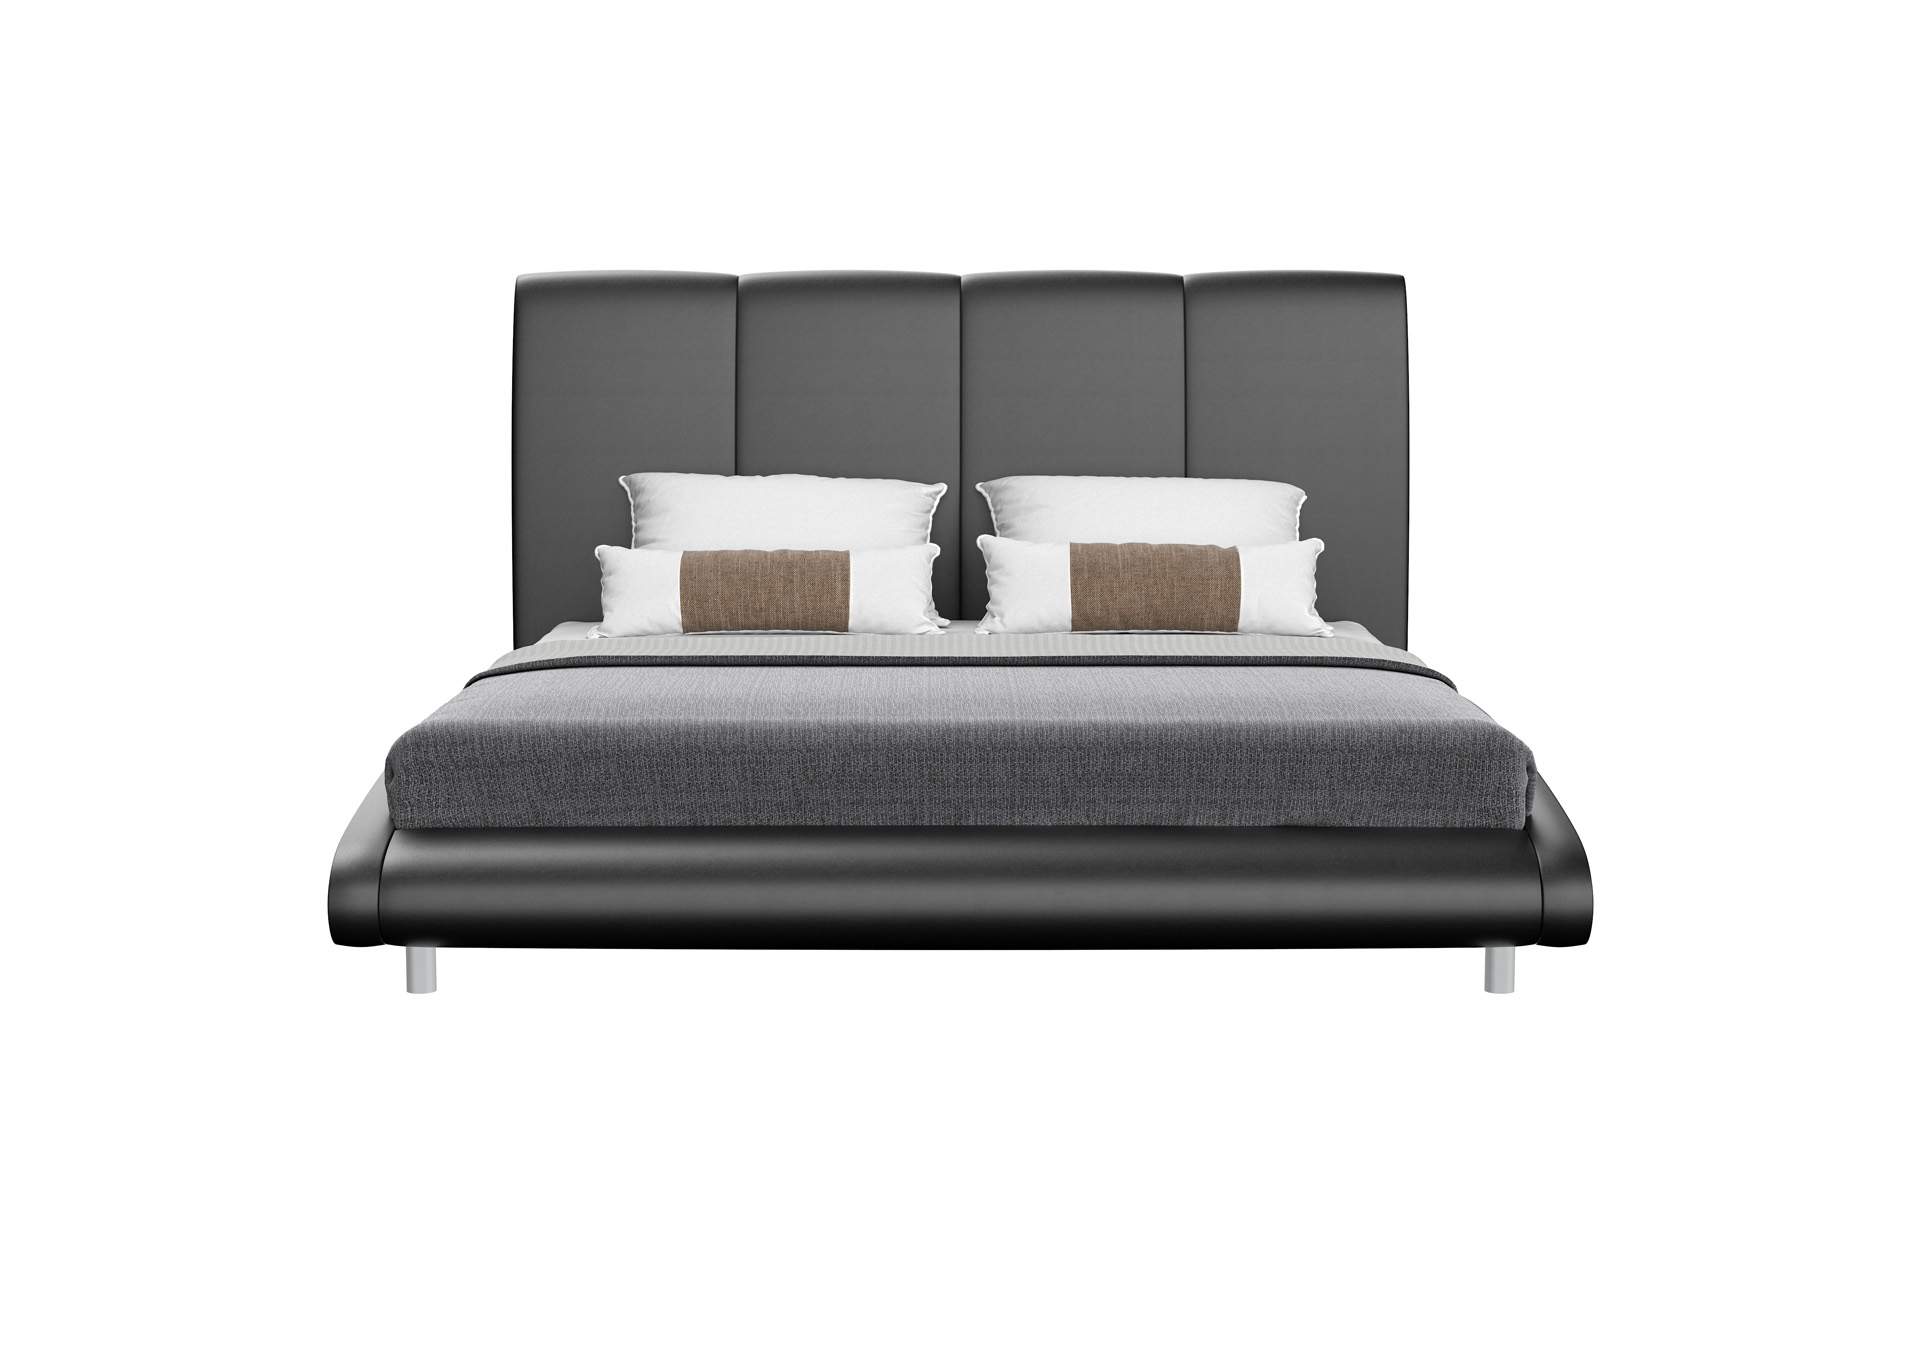 Black King Bed,Global Furniture USA